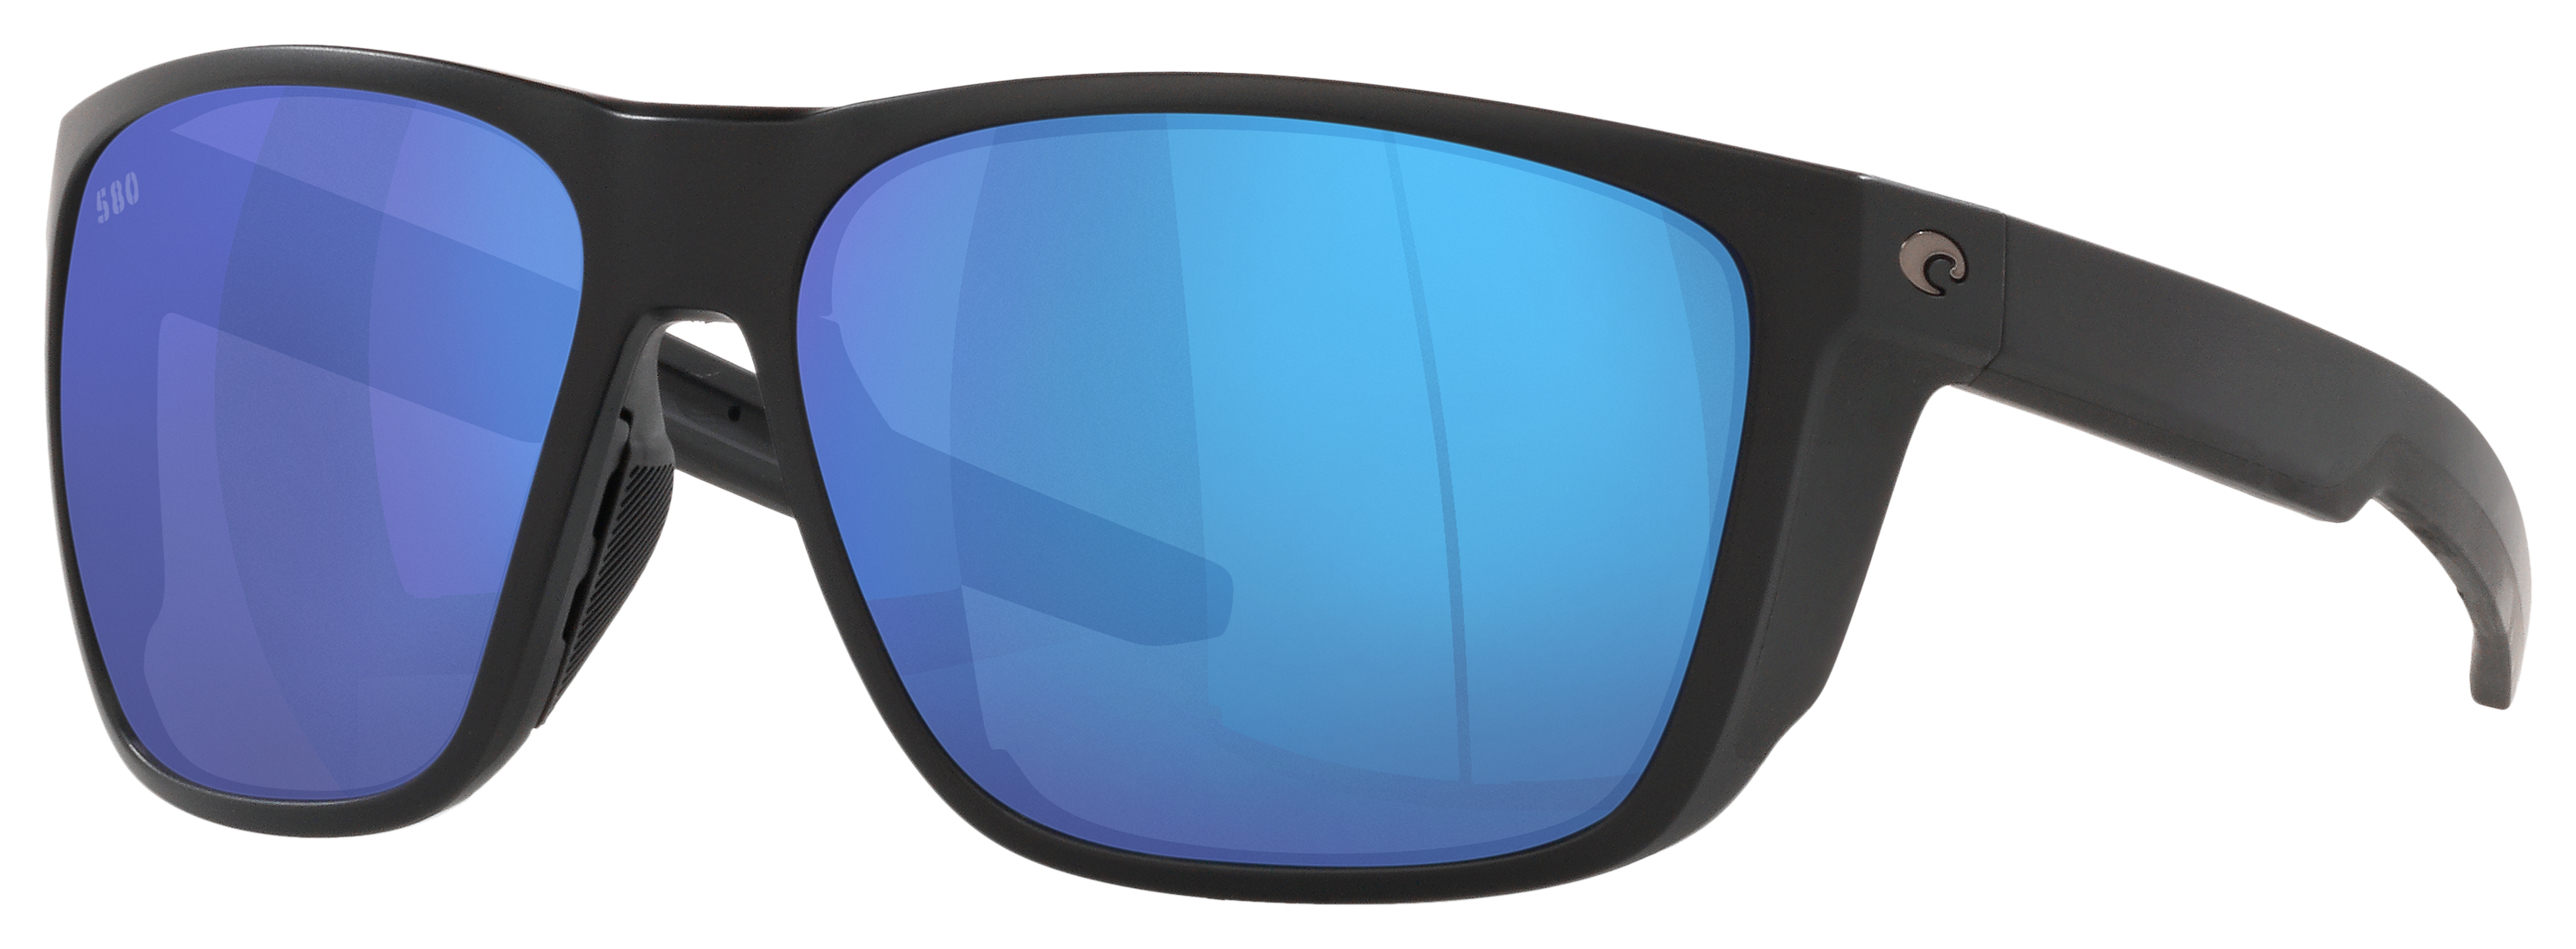 Costa Del Mar Ferg XL 580G Glass Polarized Sunglasses - Matte Black/Blue Mirror - X-Large